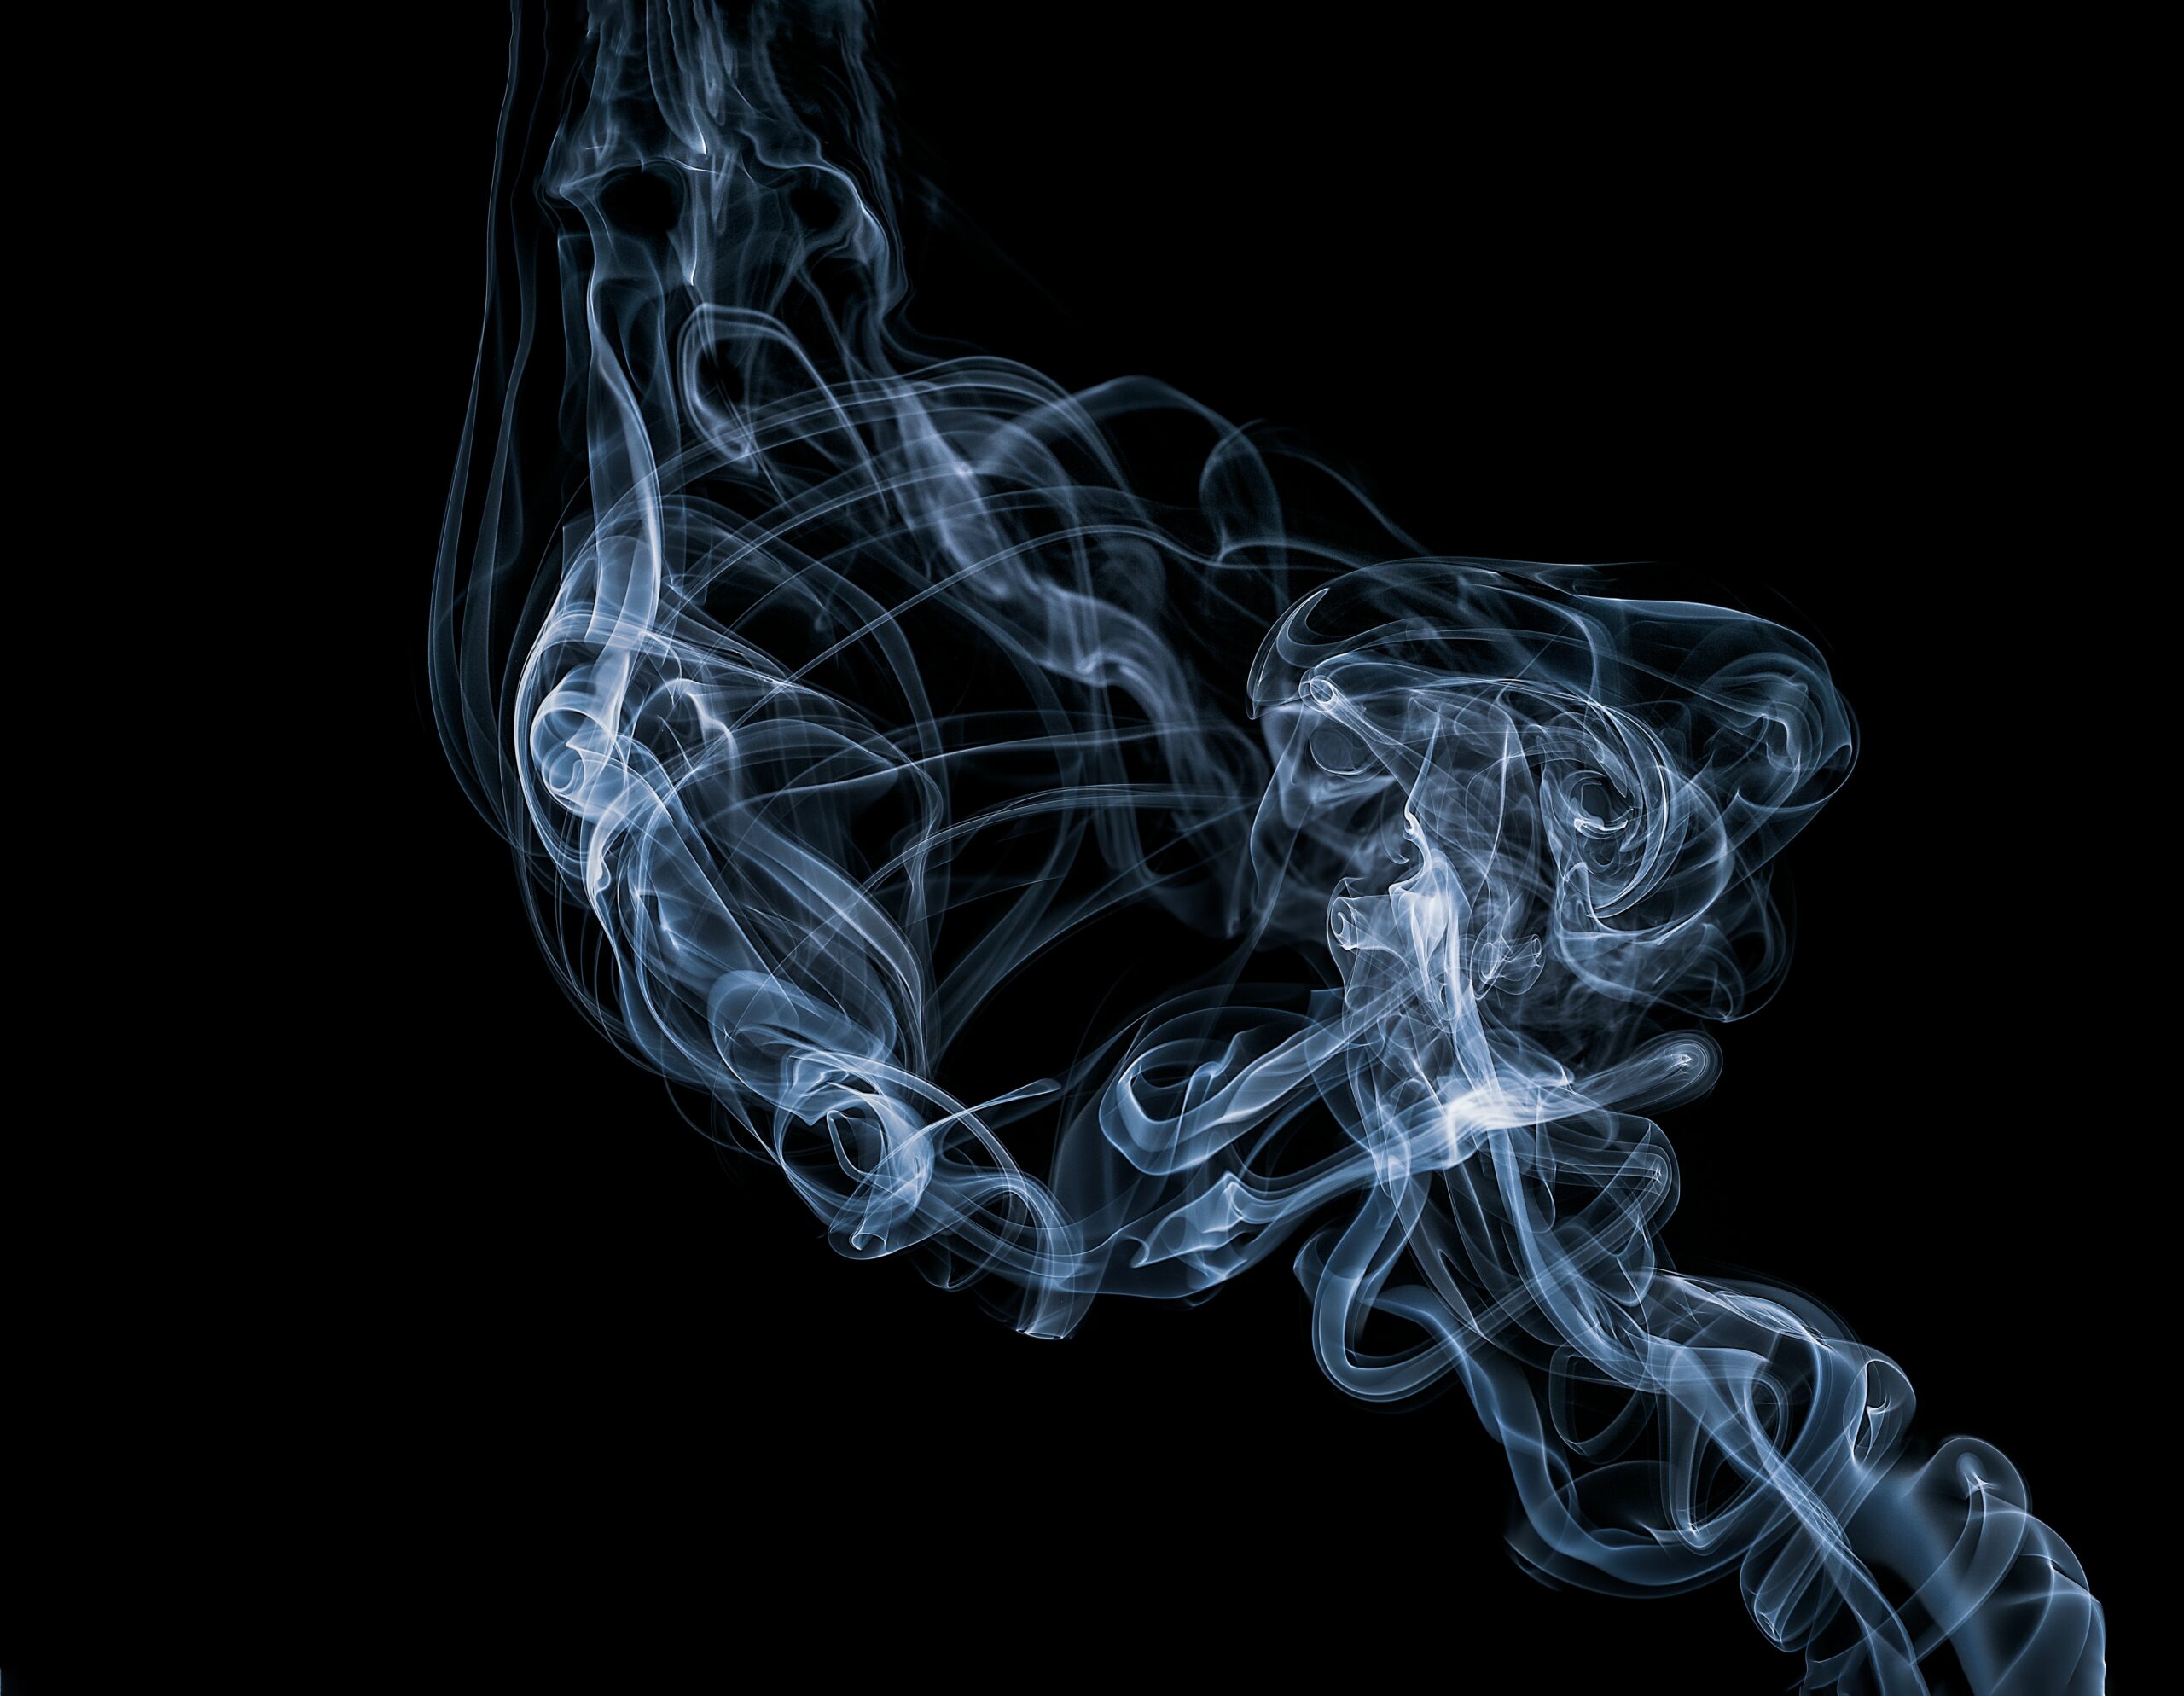 An Image of Smoke